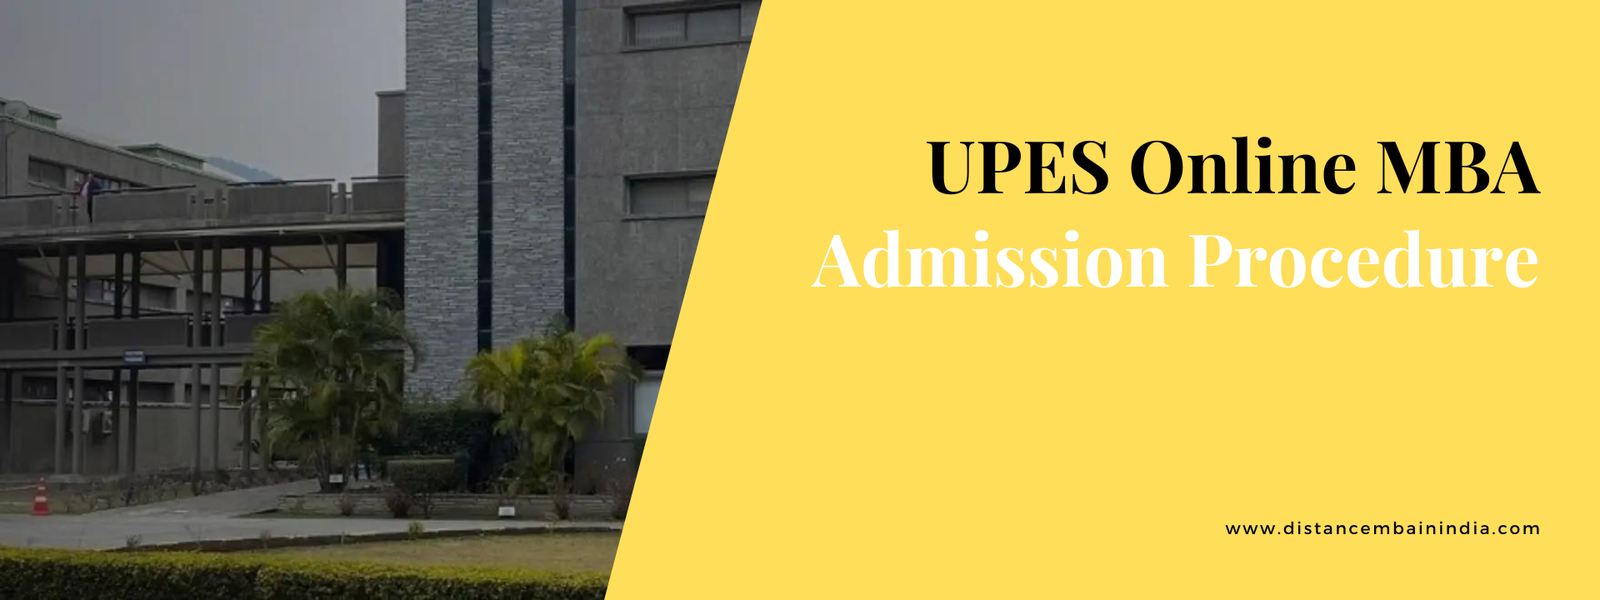 UPES Online MBA Admission Procedure